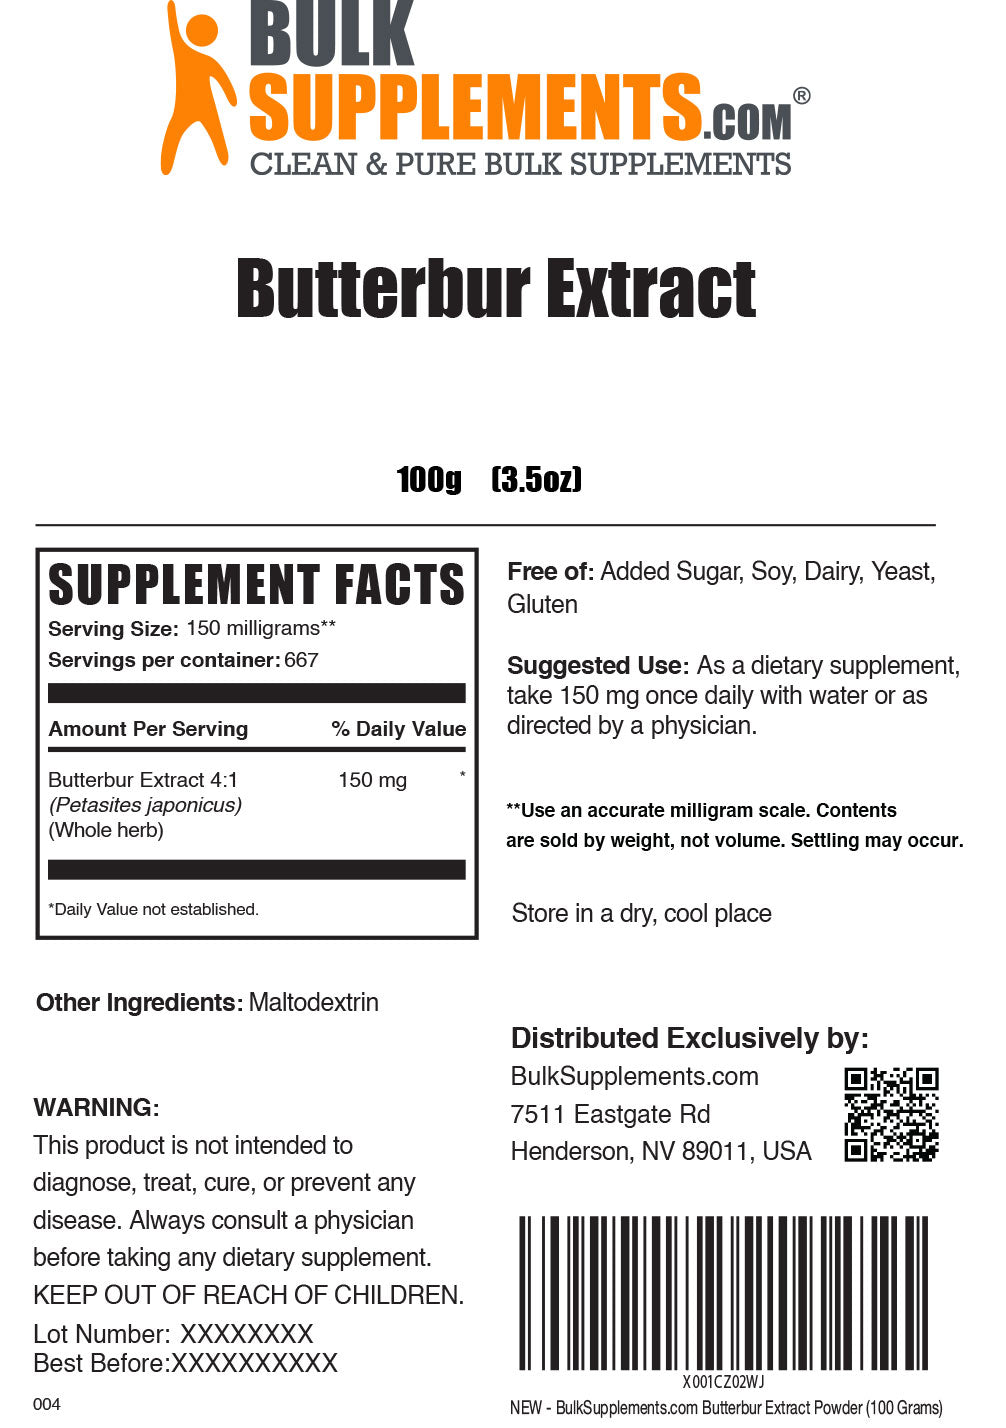 Butterbur Extract Powder